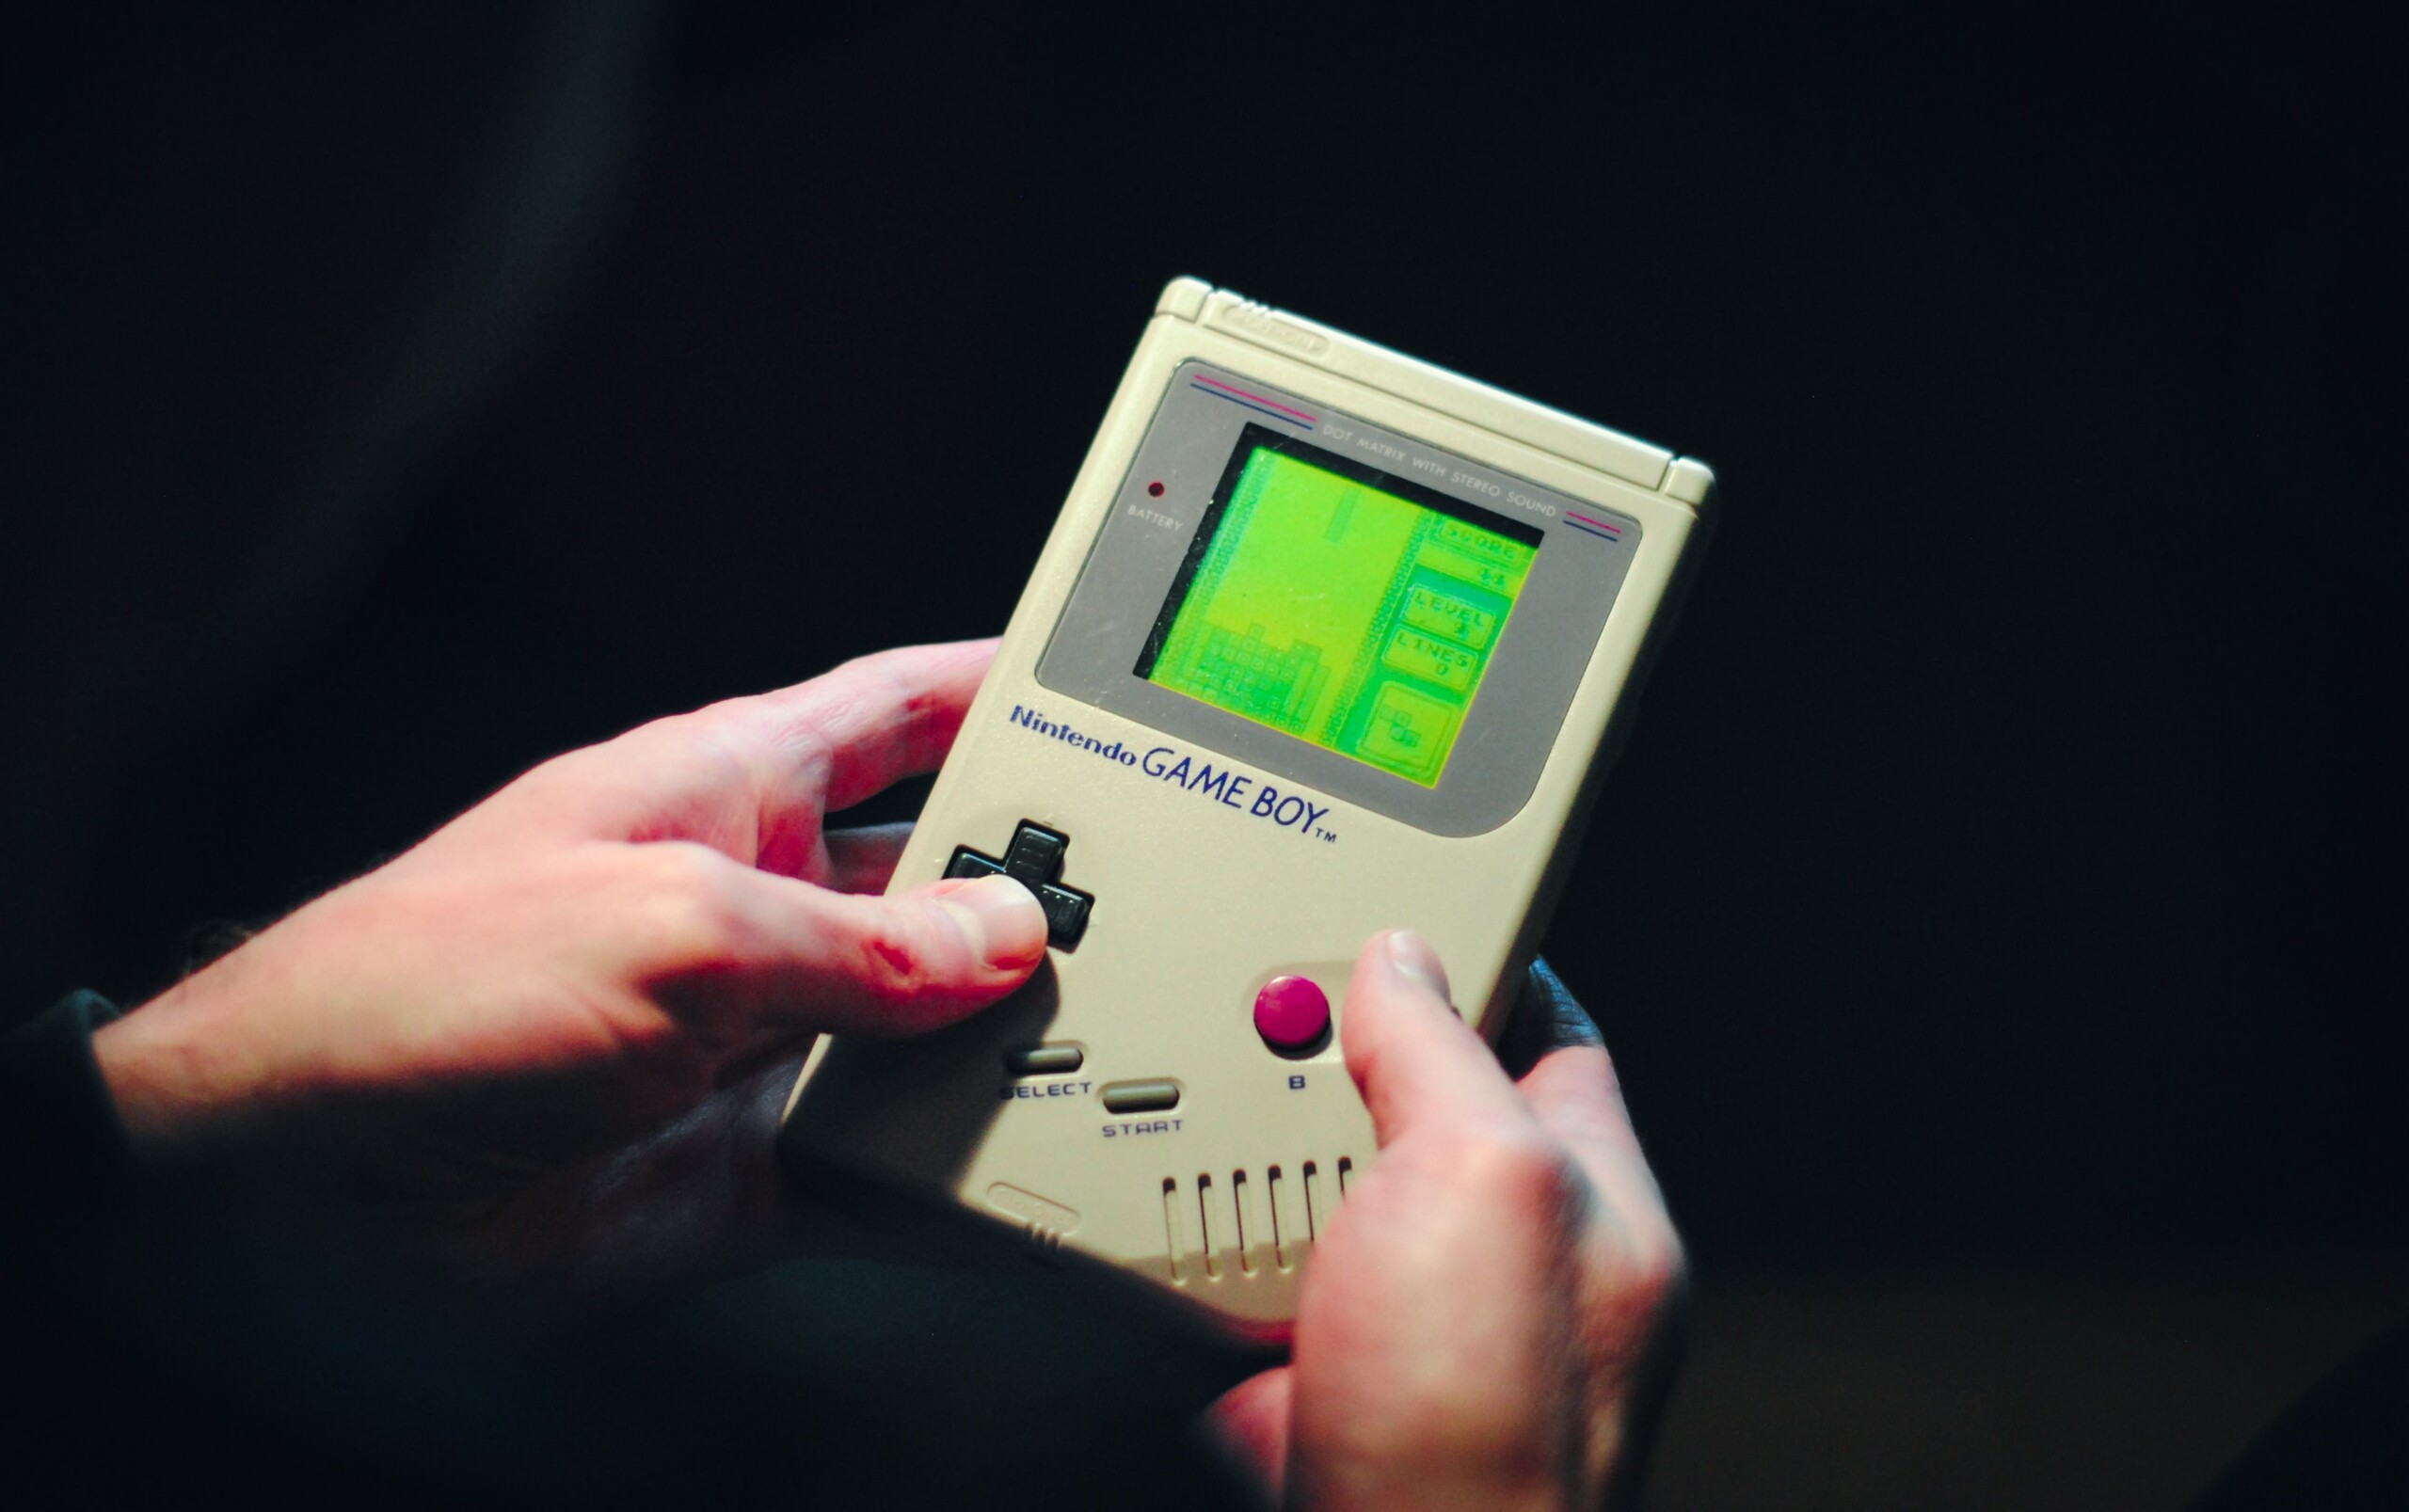 Game Boy et Game Boy Advance sur Nintendo Switch : prix, jeux